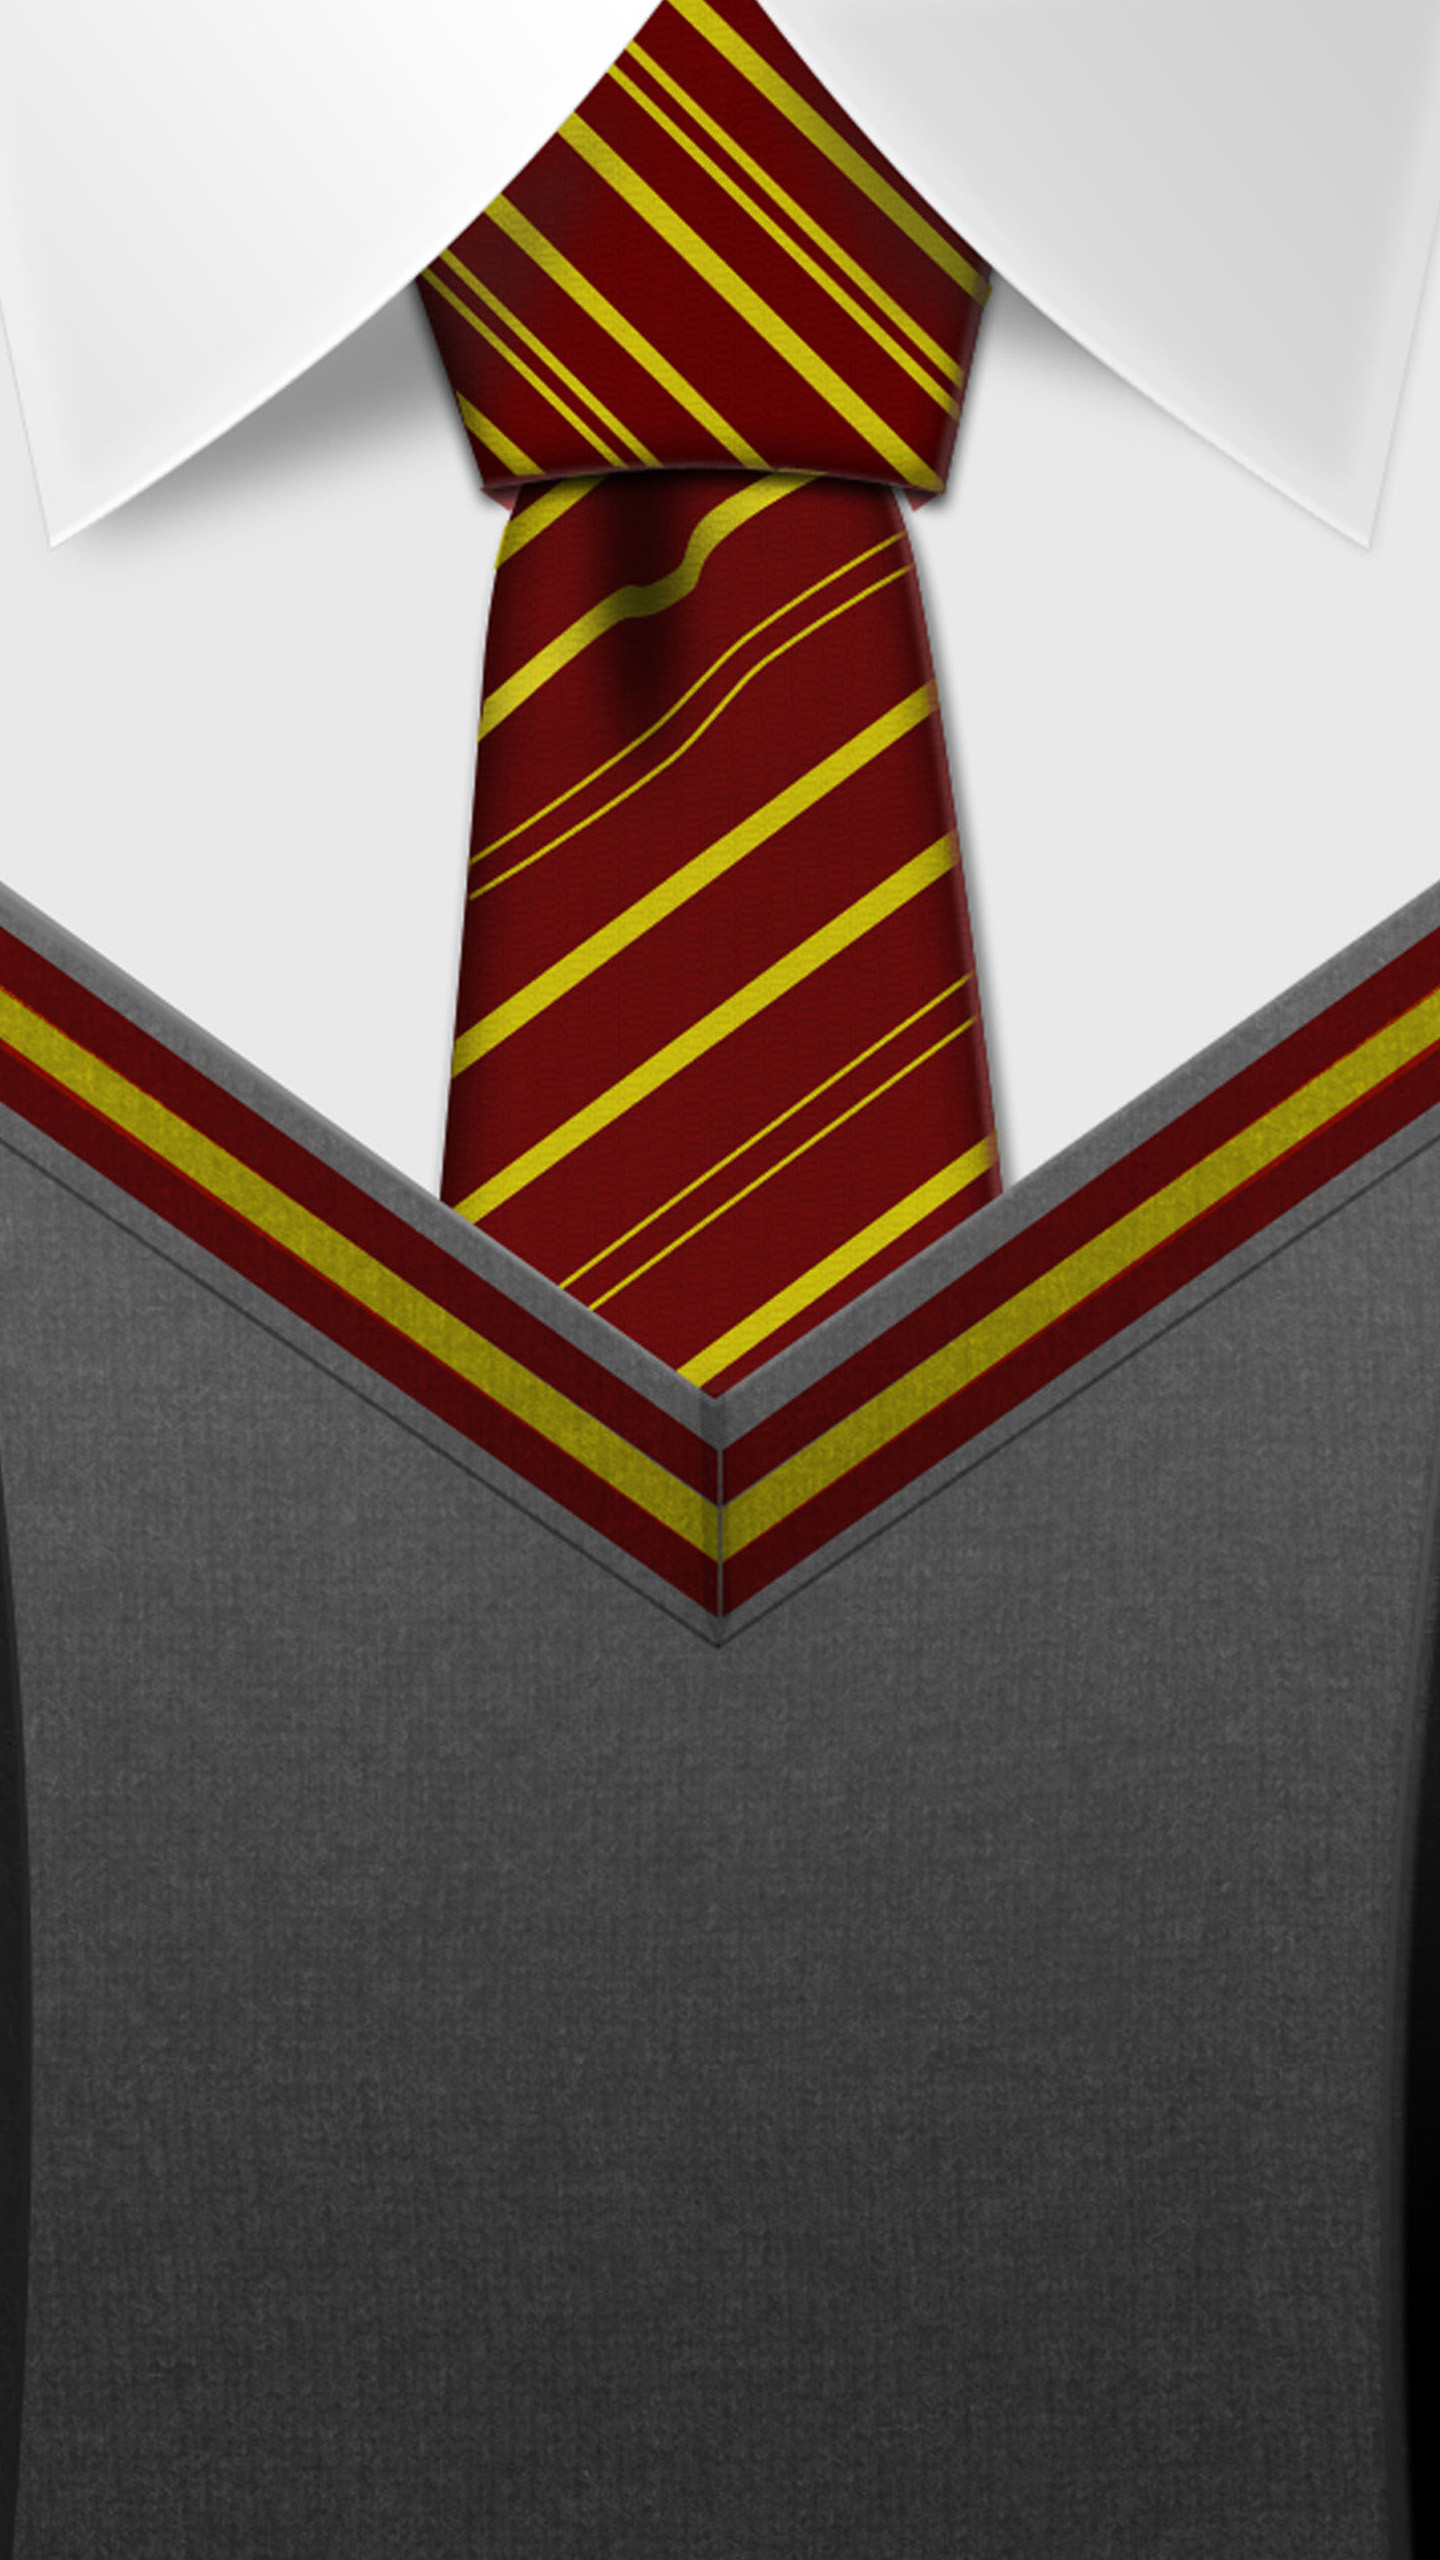 Harry Potter gryffindor tie LG G3 Wallpapers